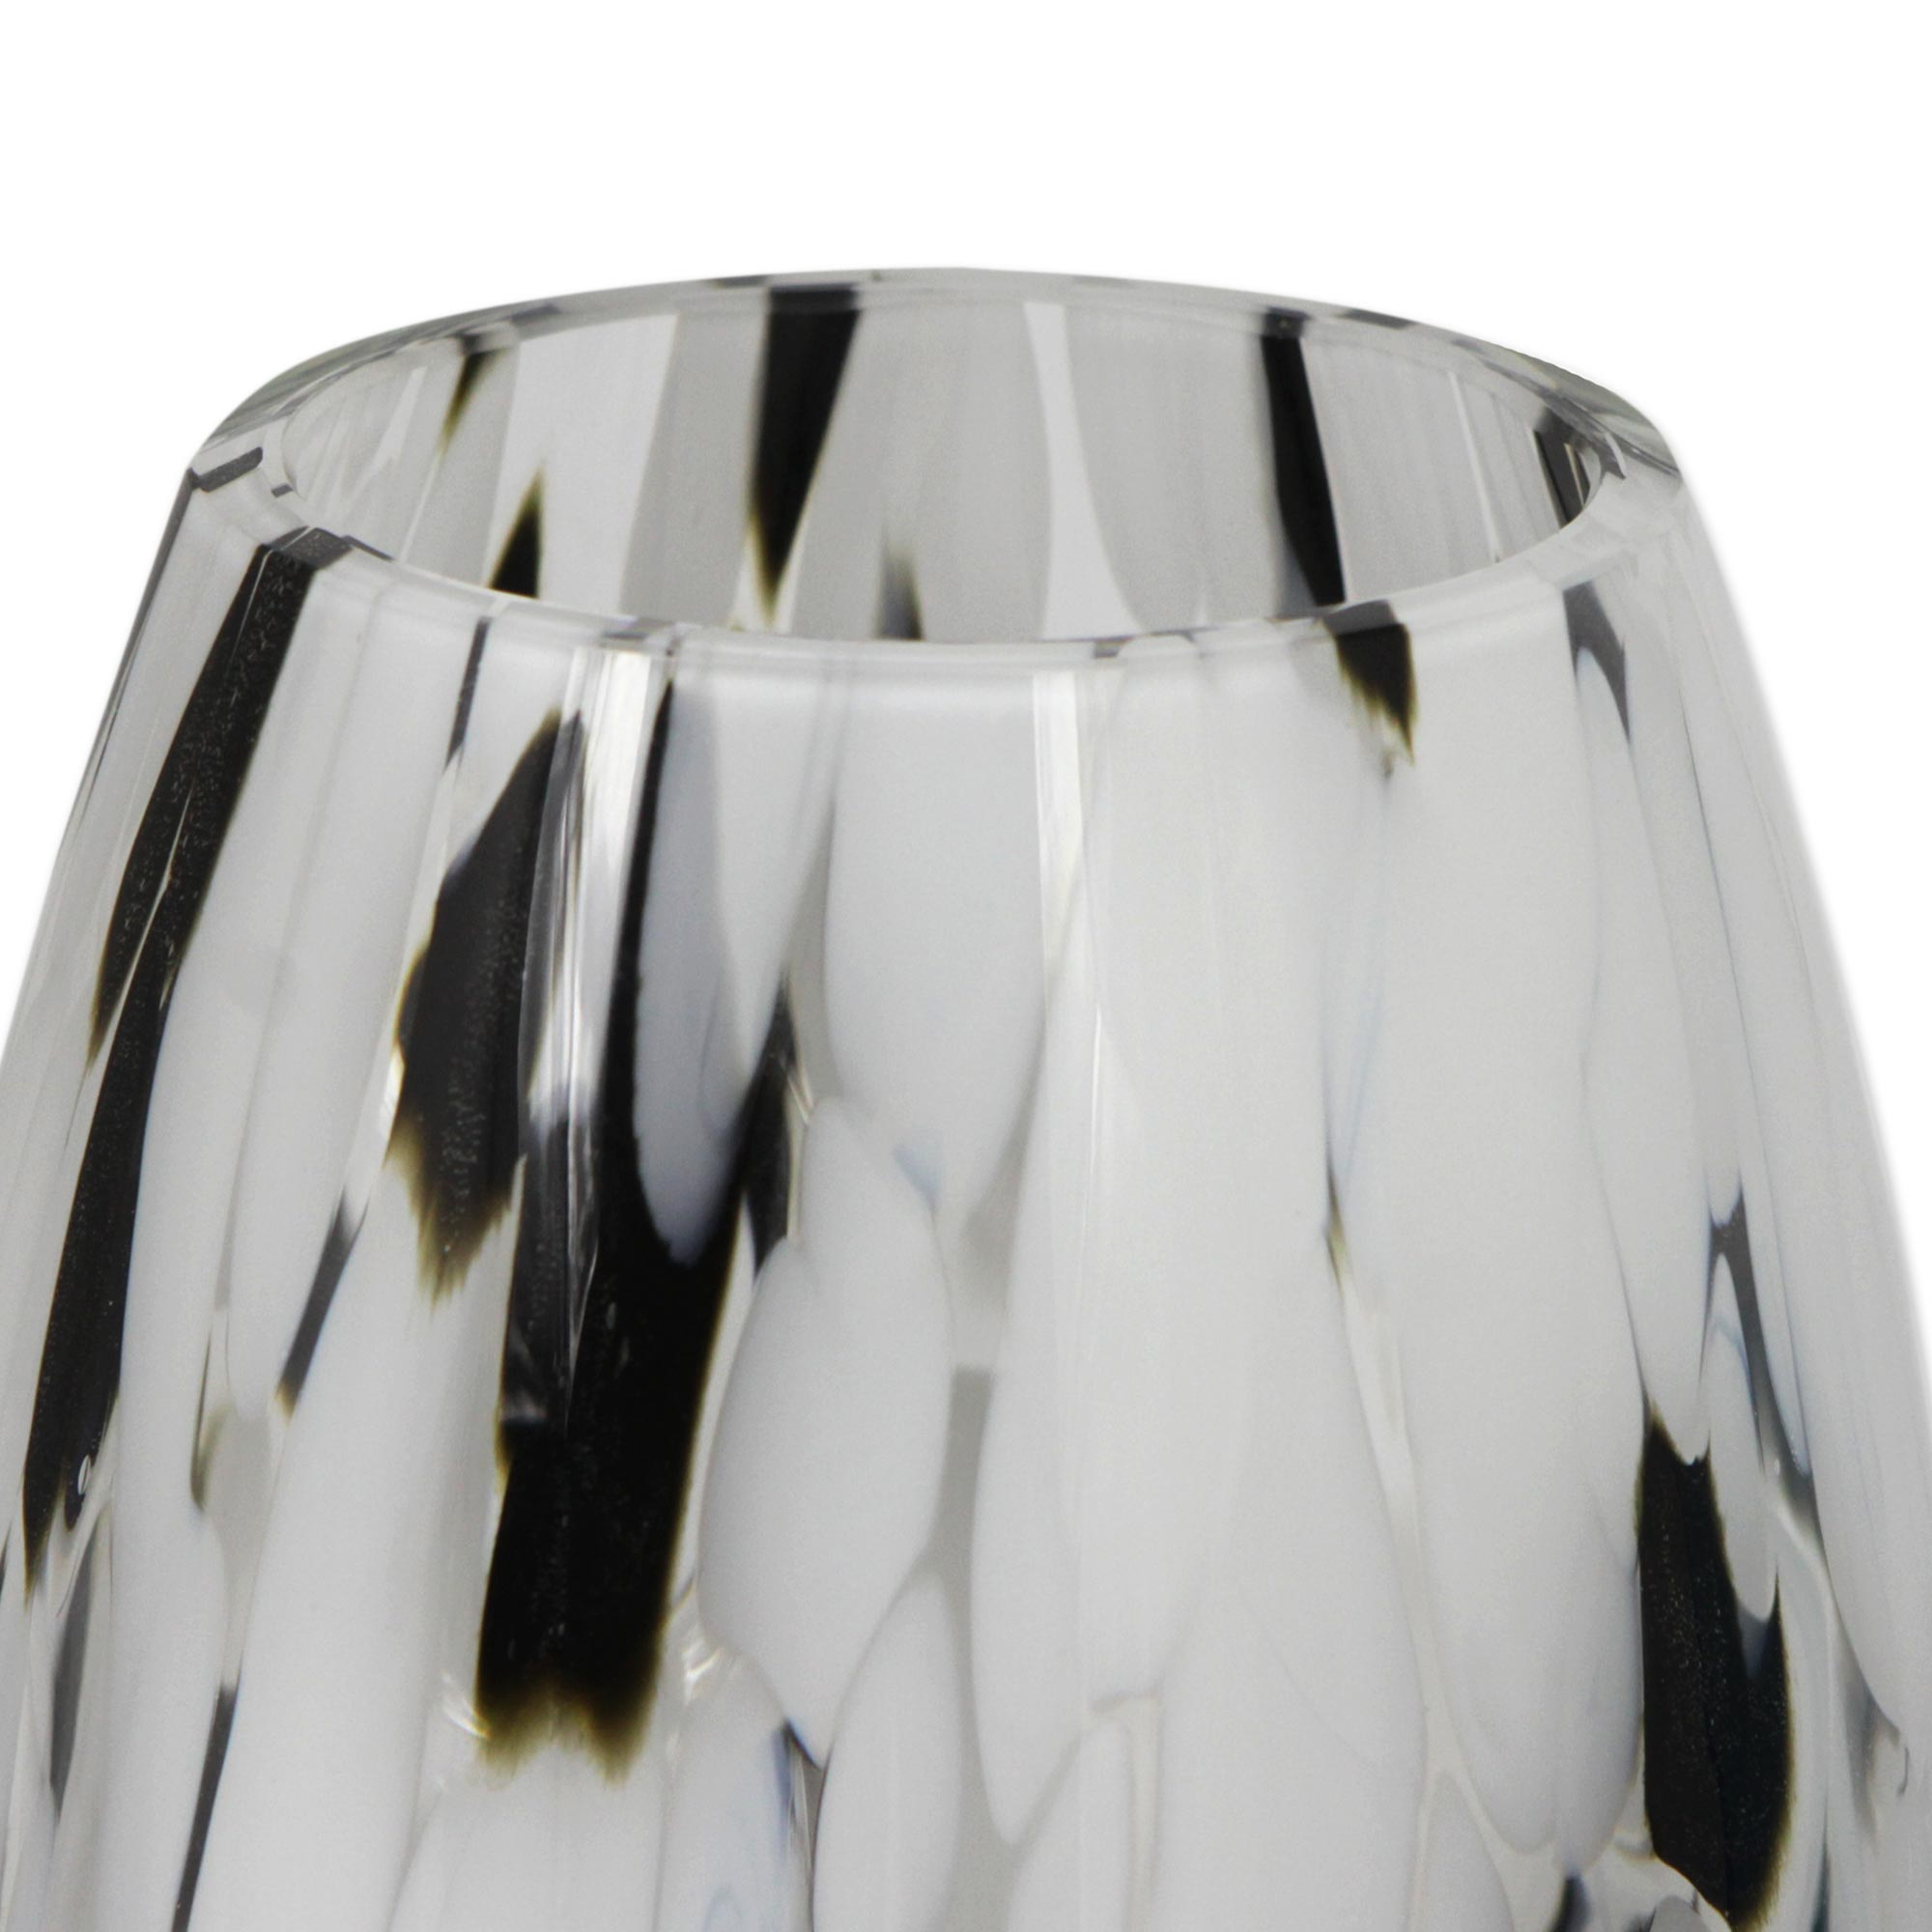 Hand Blown Murano Style Art Glass Vase In Black And White Elegant